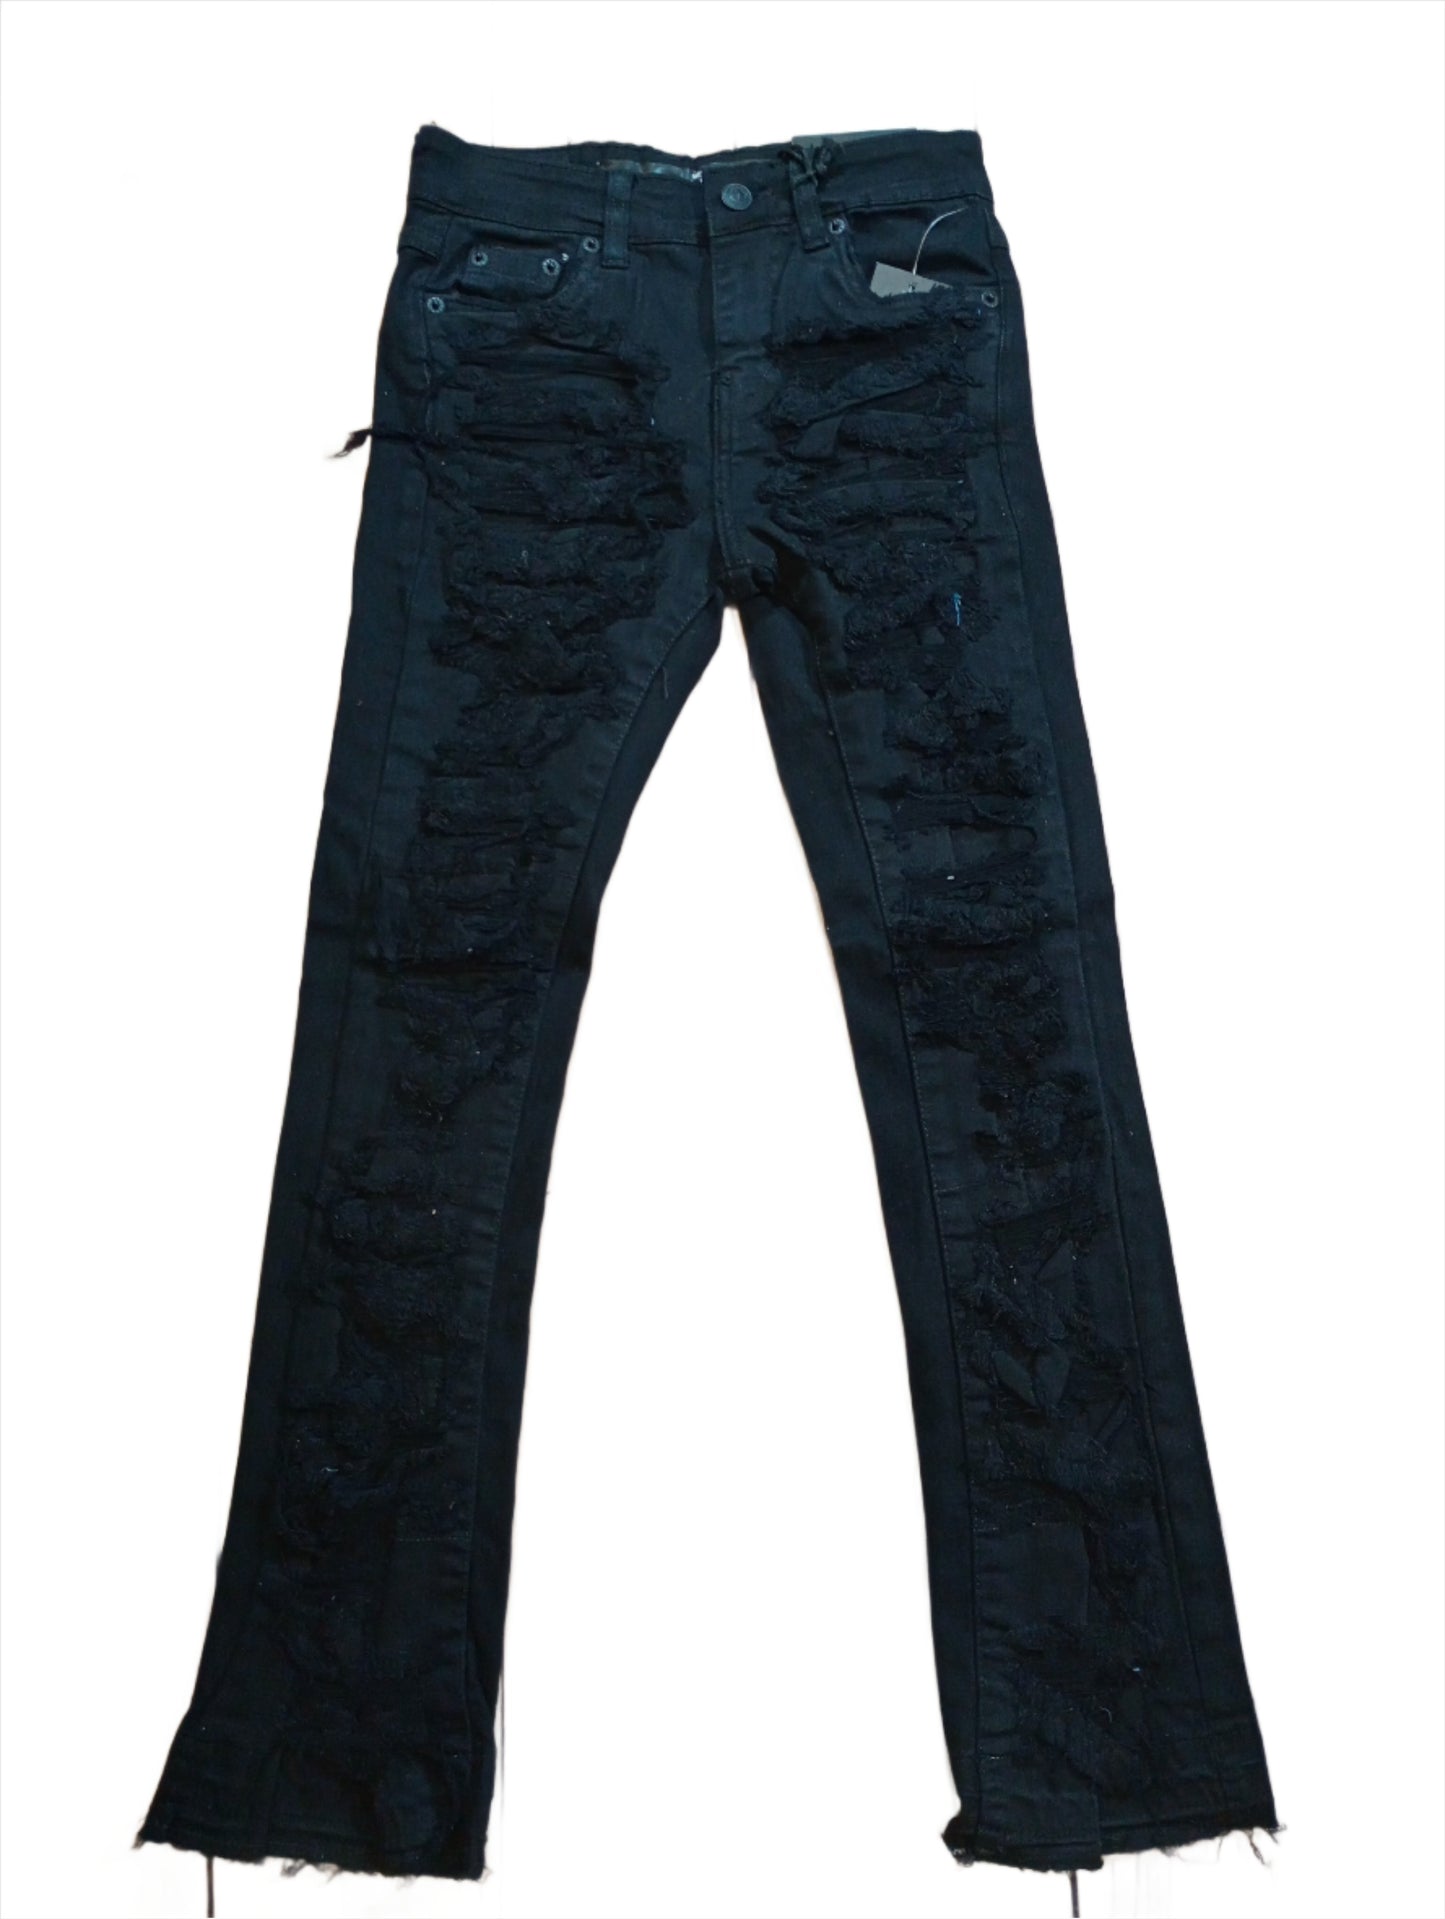 Rip/Repair Stacked Jeans